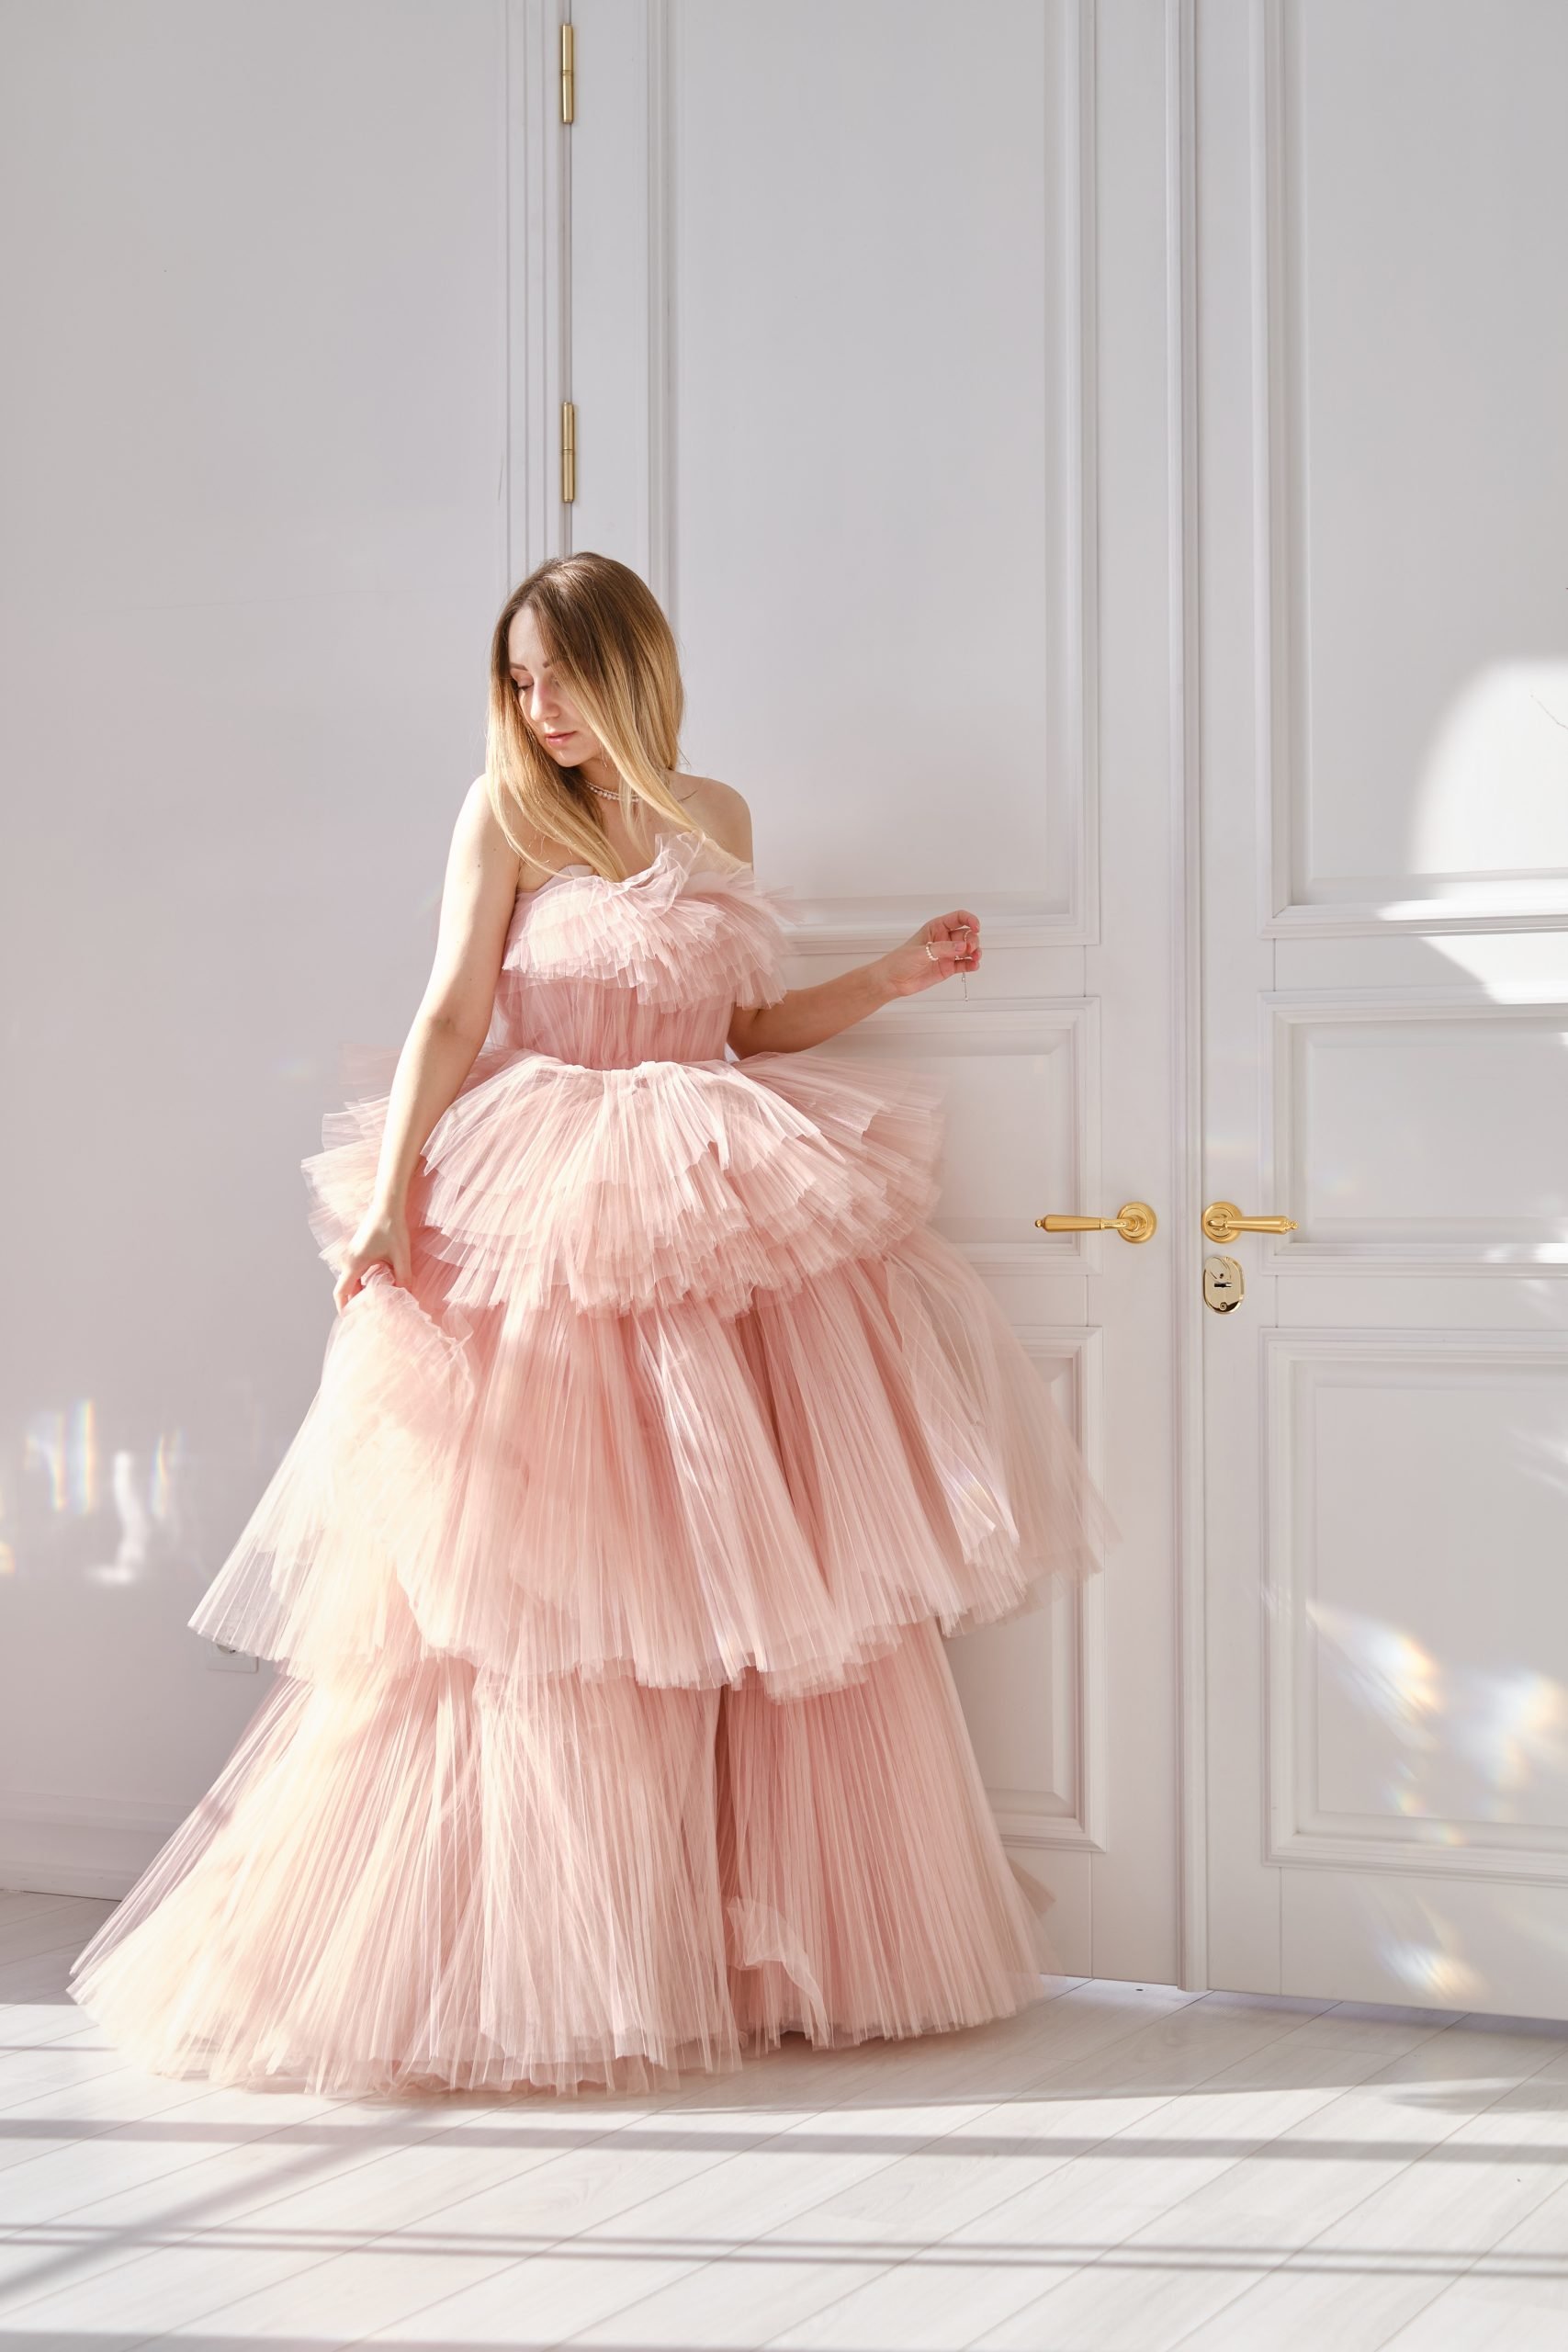 Jessica Biel's Dress at the 2018 Emmys | POPSUGAR Fashion